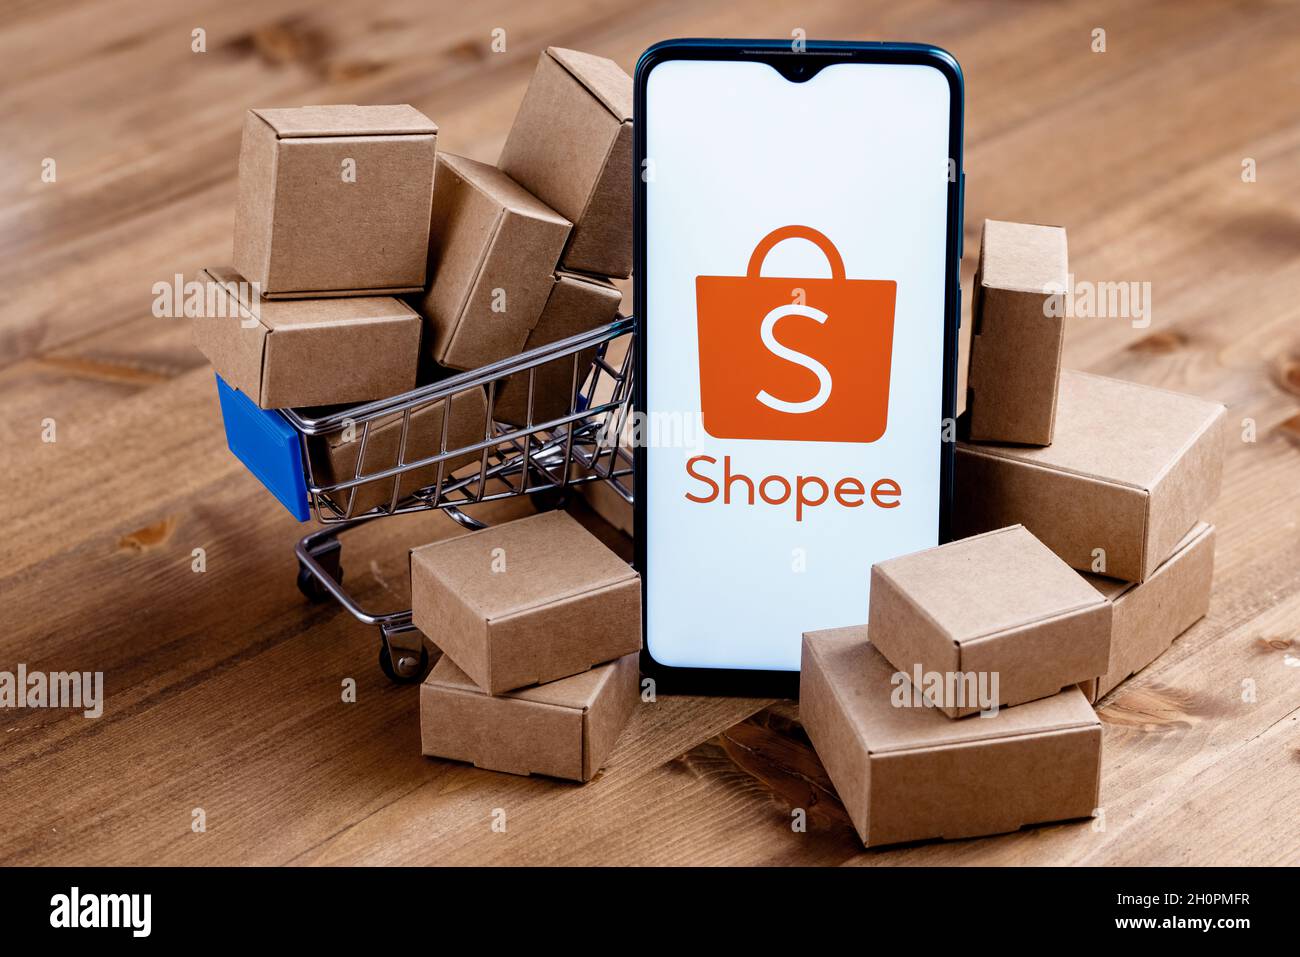 Shopee is e-commerce technology company. Smartphone with Shopee